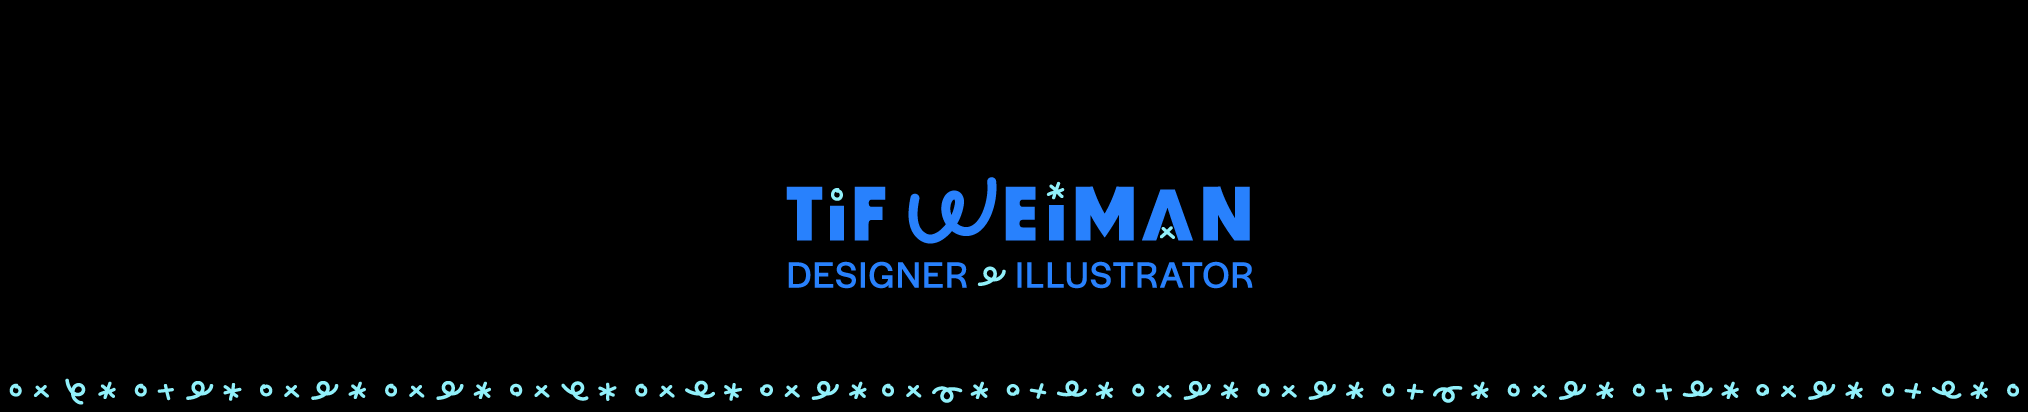 Tif Weiman's profile banner